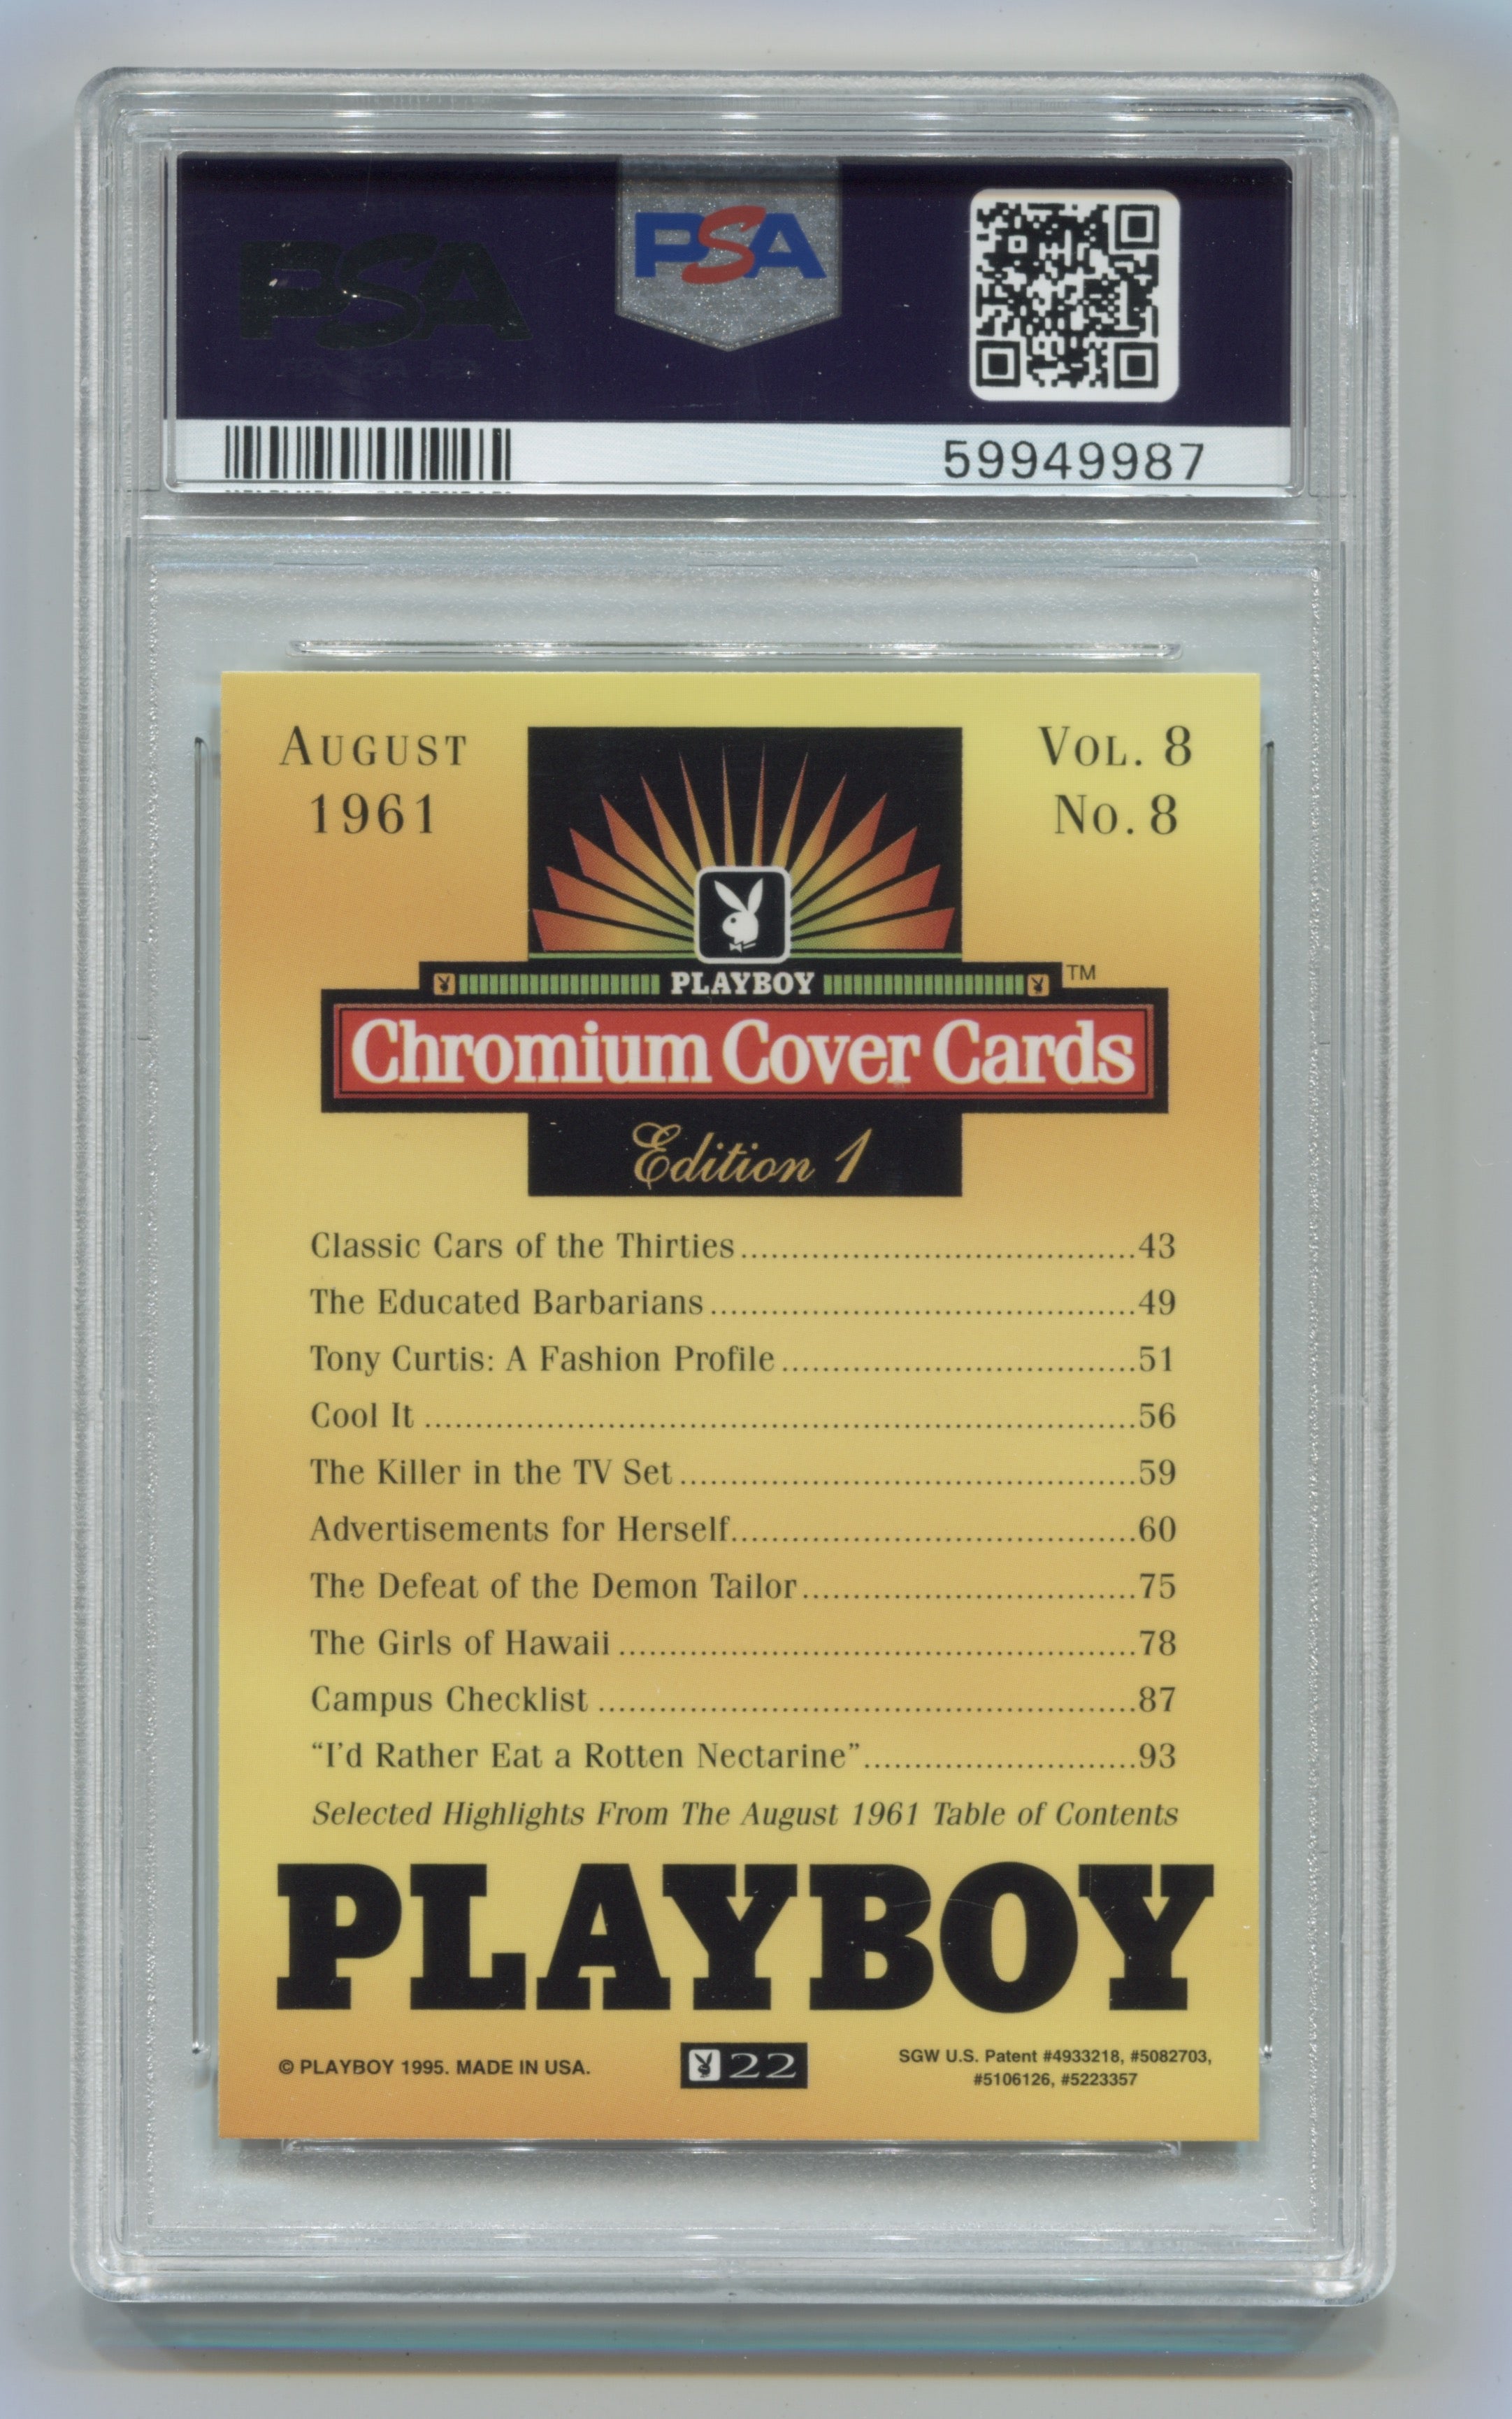 1995 Playboy Chromium Covers #22 August 1961 PSA 9 | Eastridge Sports Cards